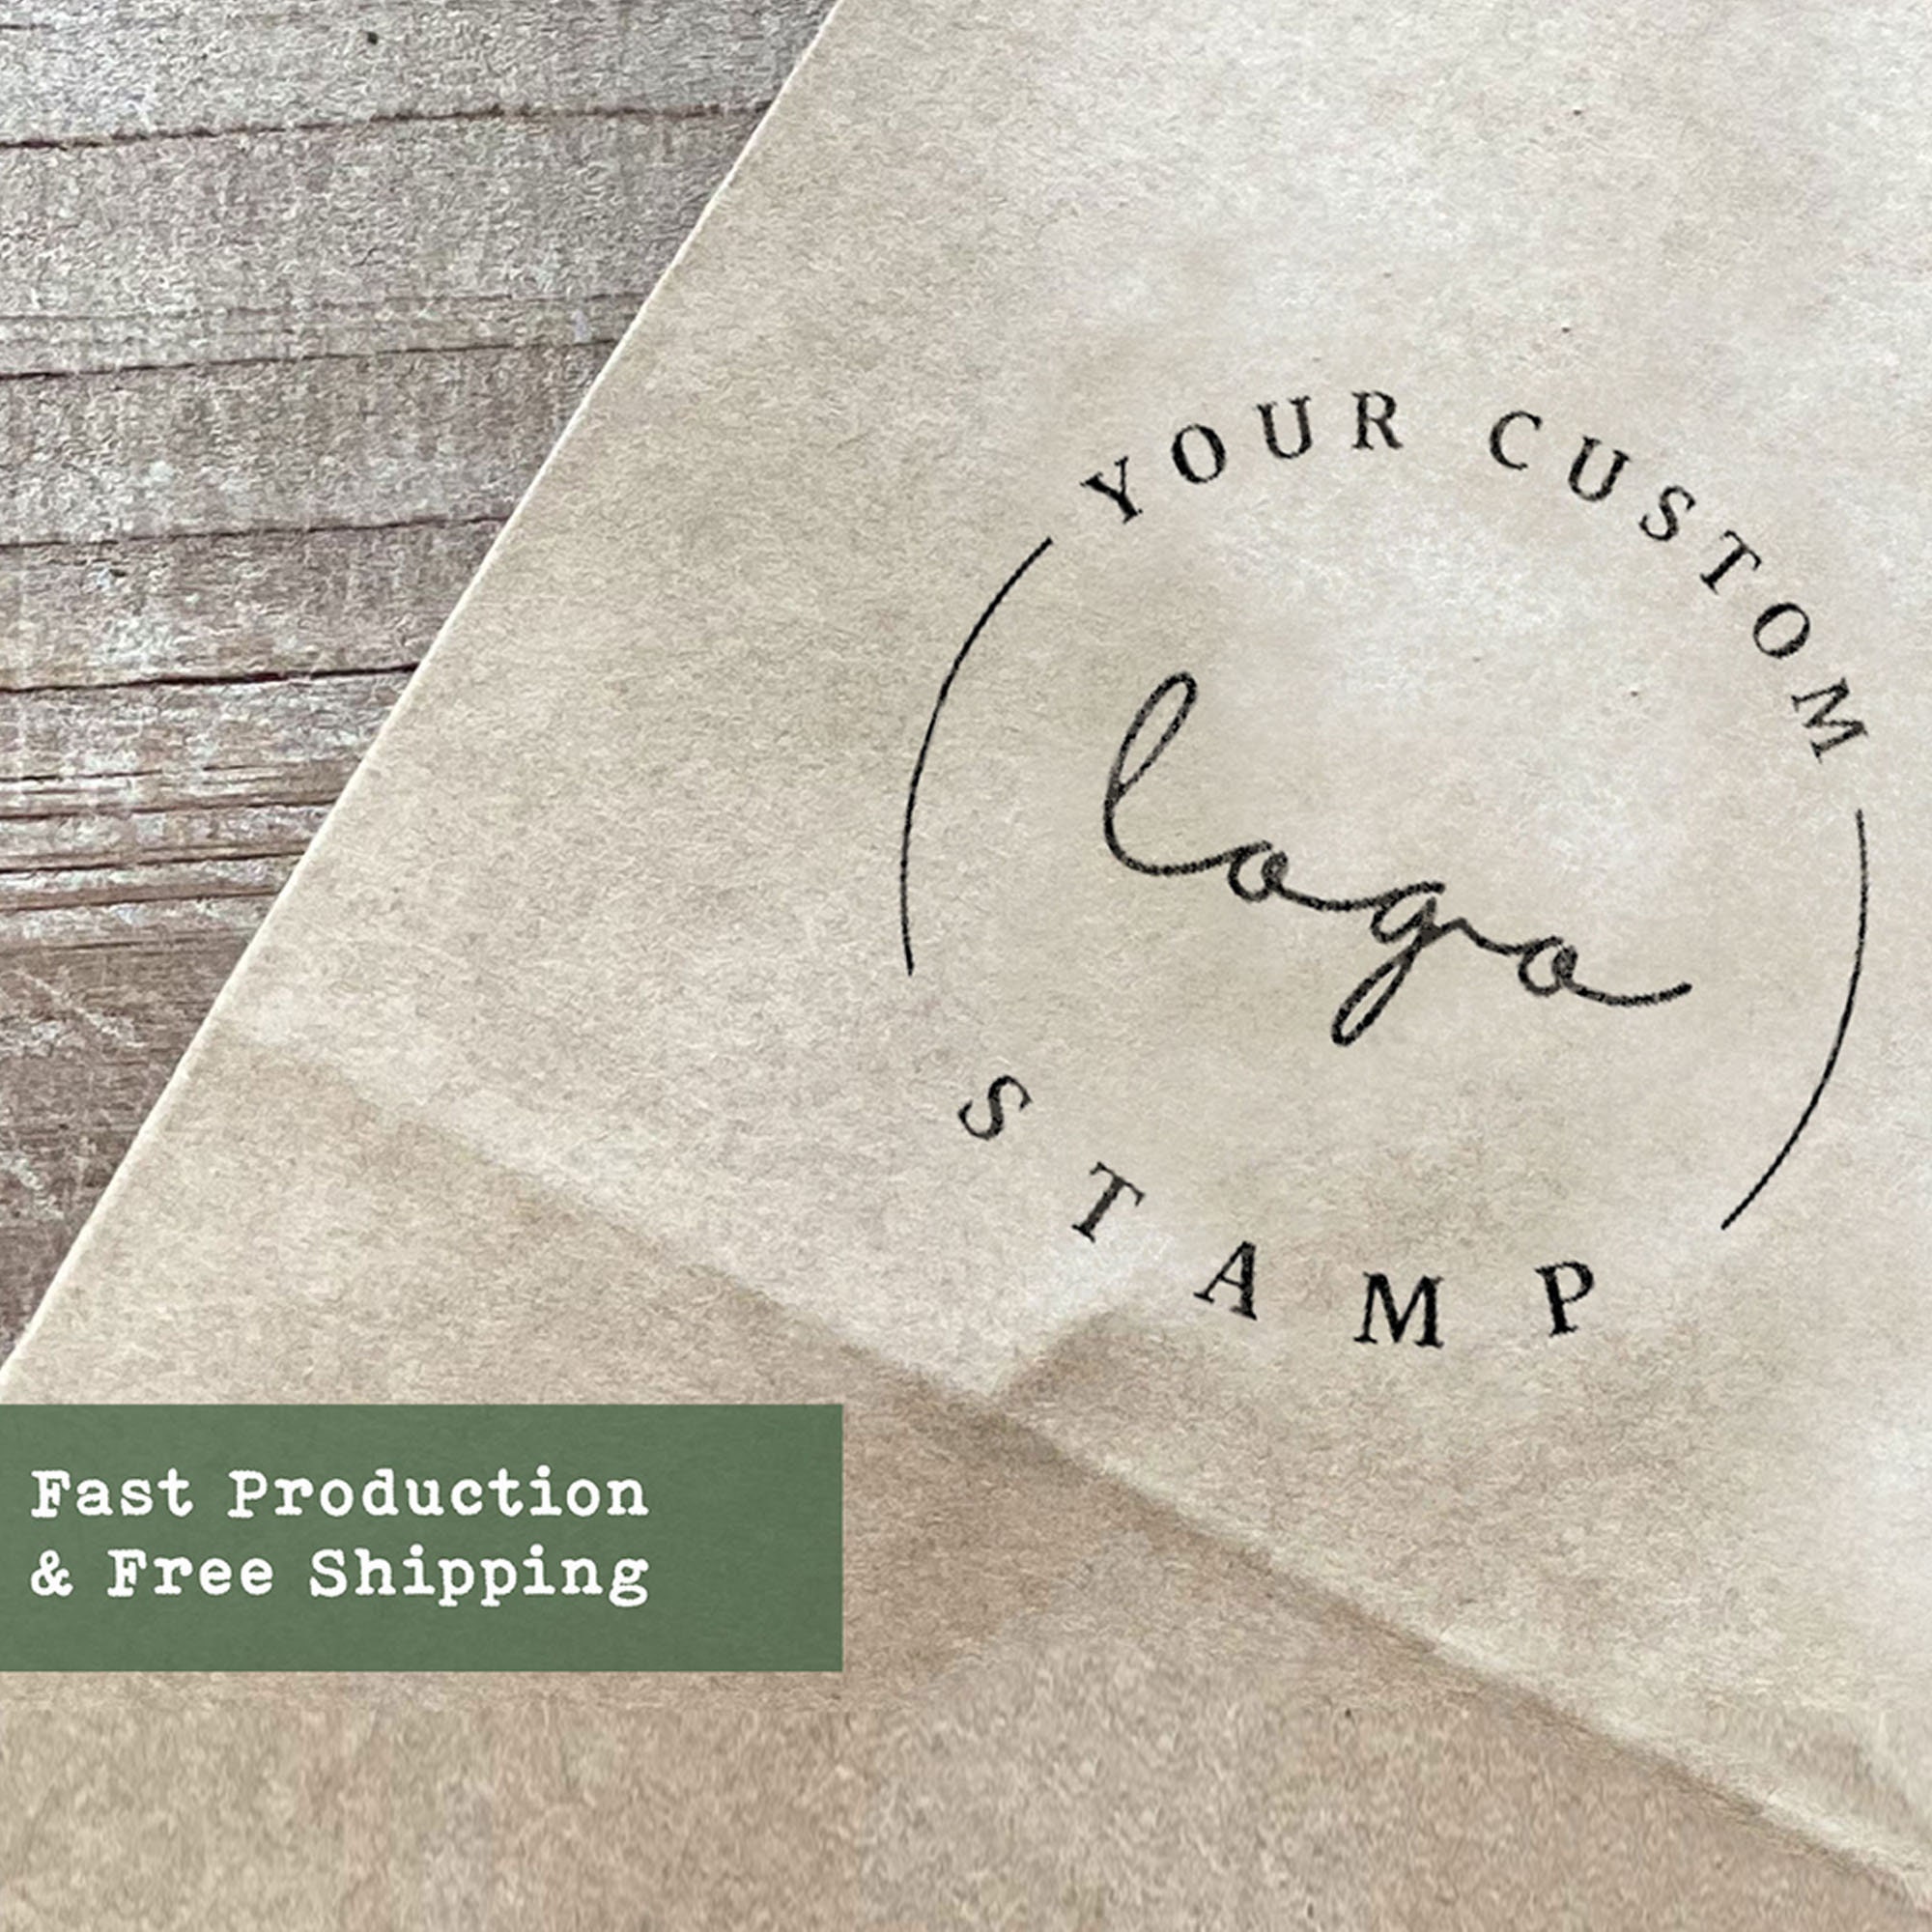 Custom Logo Stamp From Your Design or Logo, Business Custom Stamp